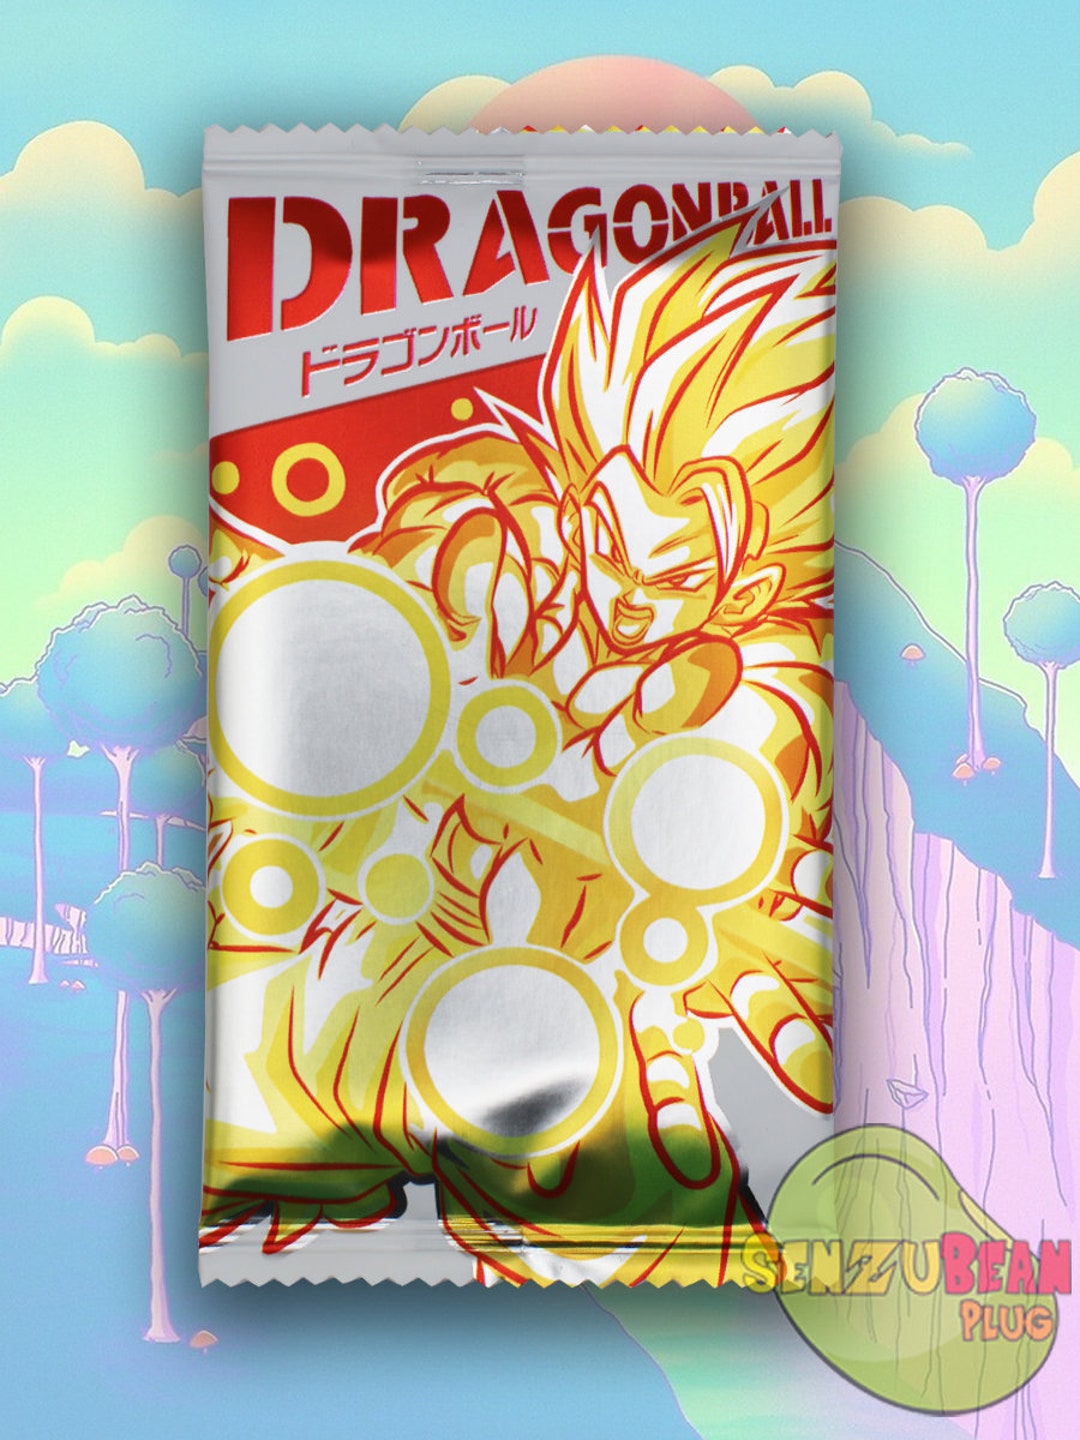 Dragon Ball Card Album Holder Anime Game Cards Storage Case Holder